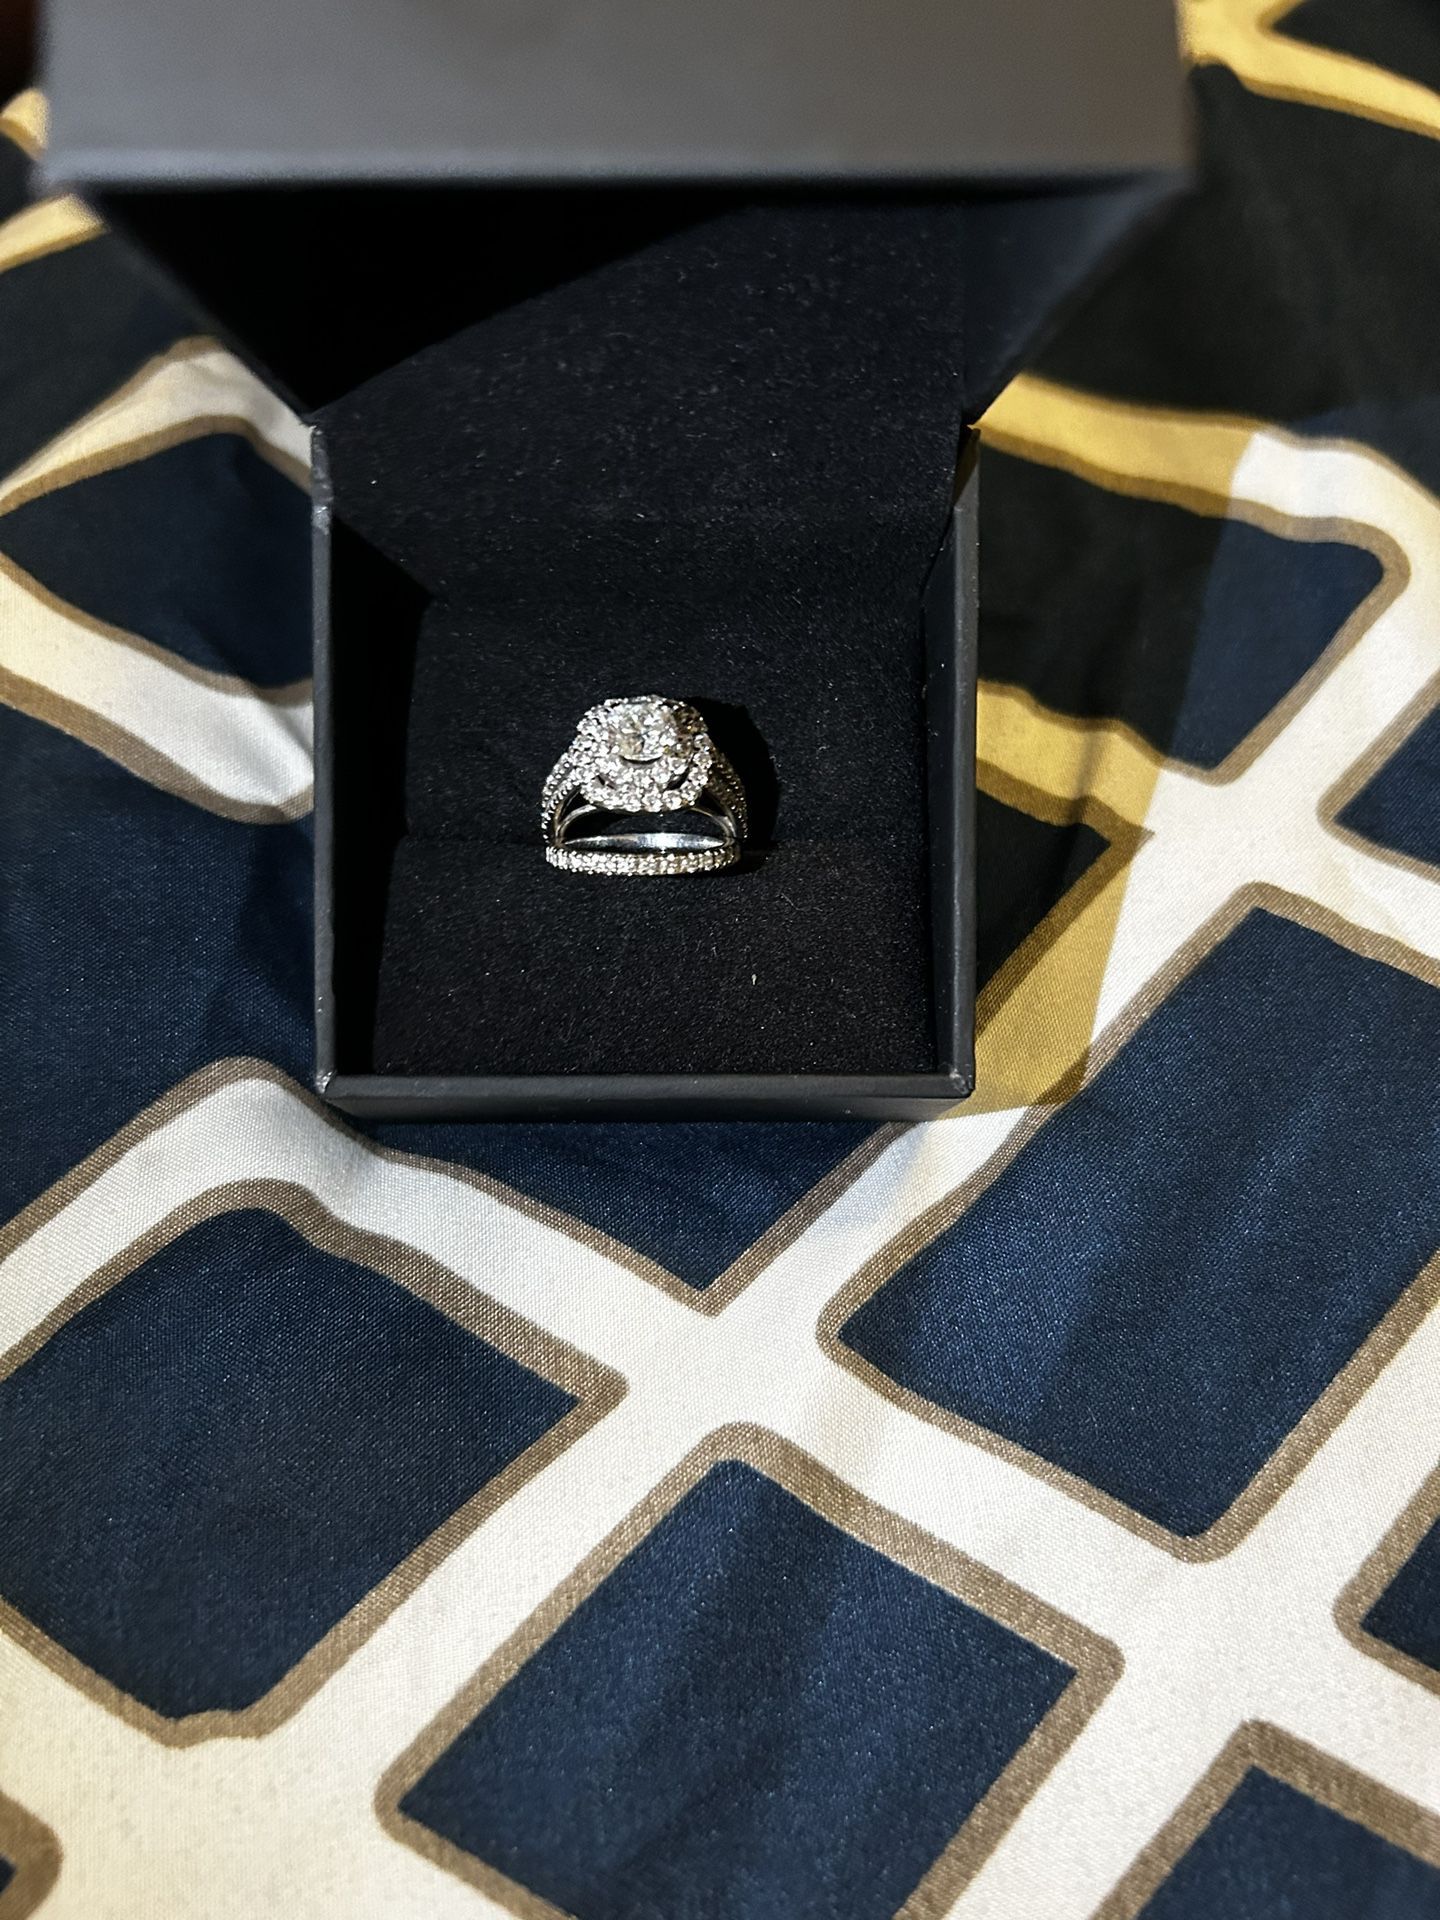 Vera Wang Diamond Ring